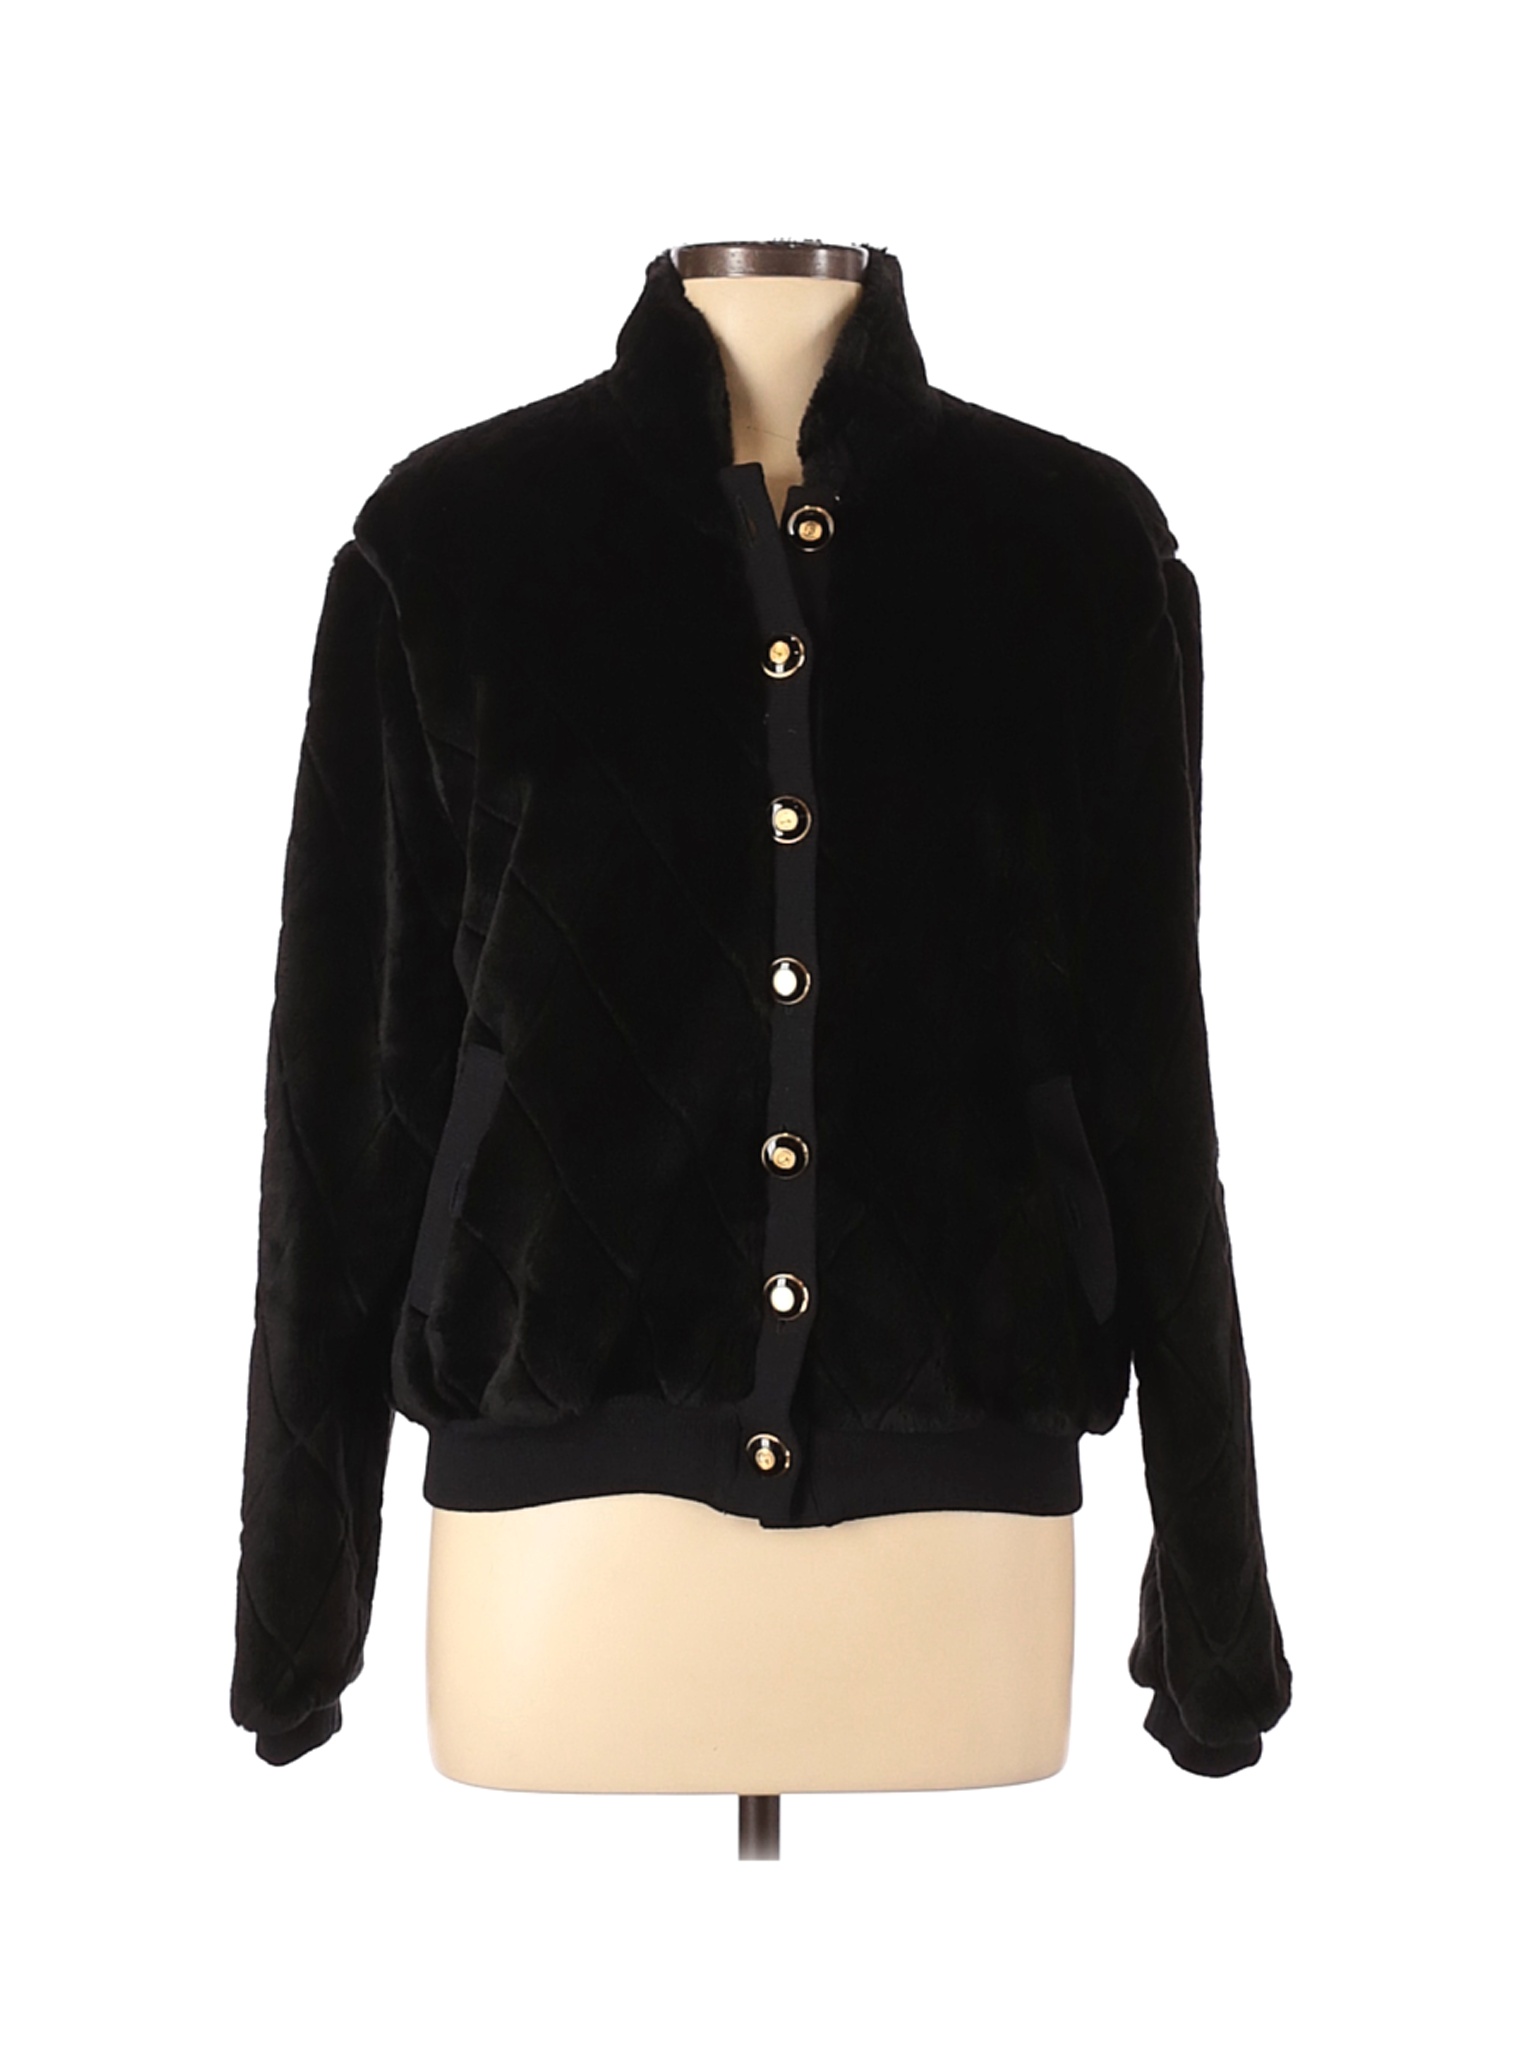 St. John Women Black Coat L | eBay